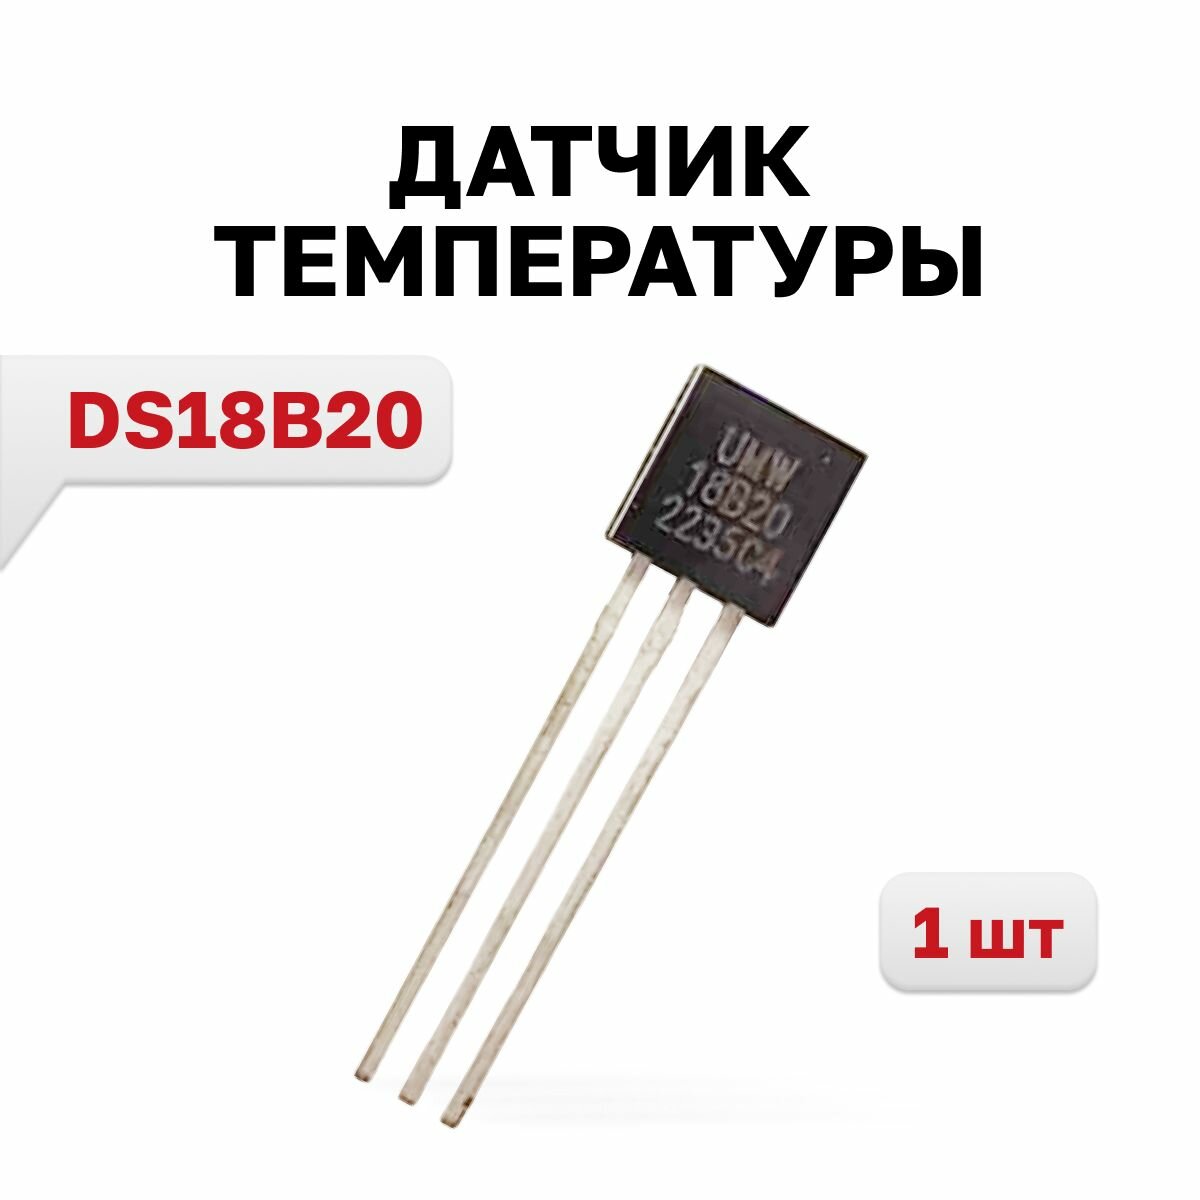 DS18B20 датчик температуры MSKSEMI 1 шт.